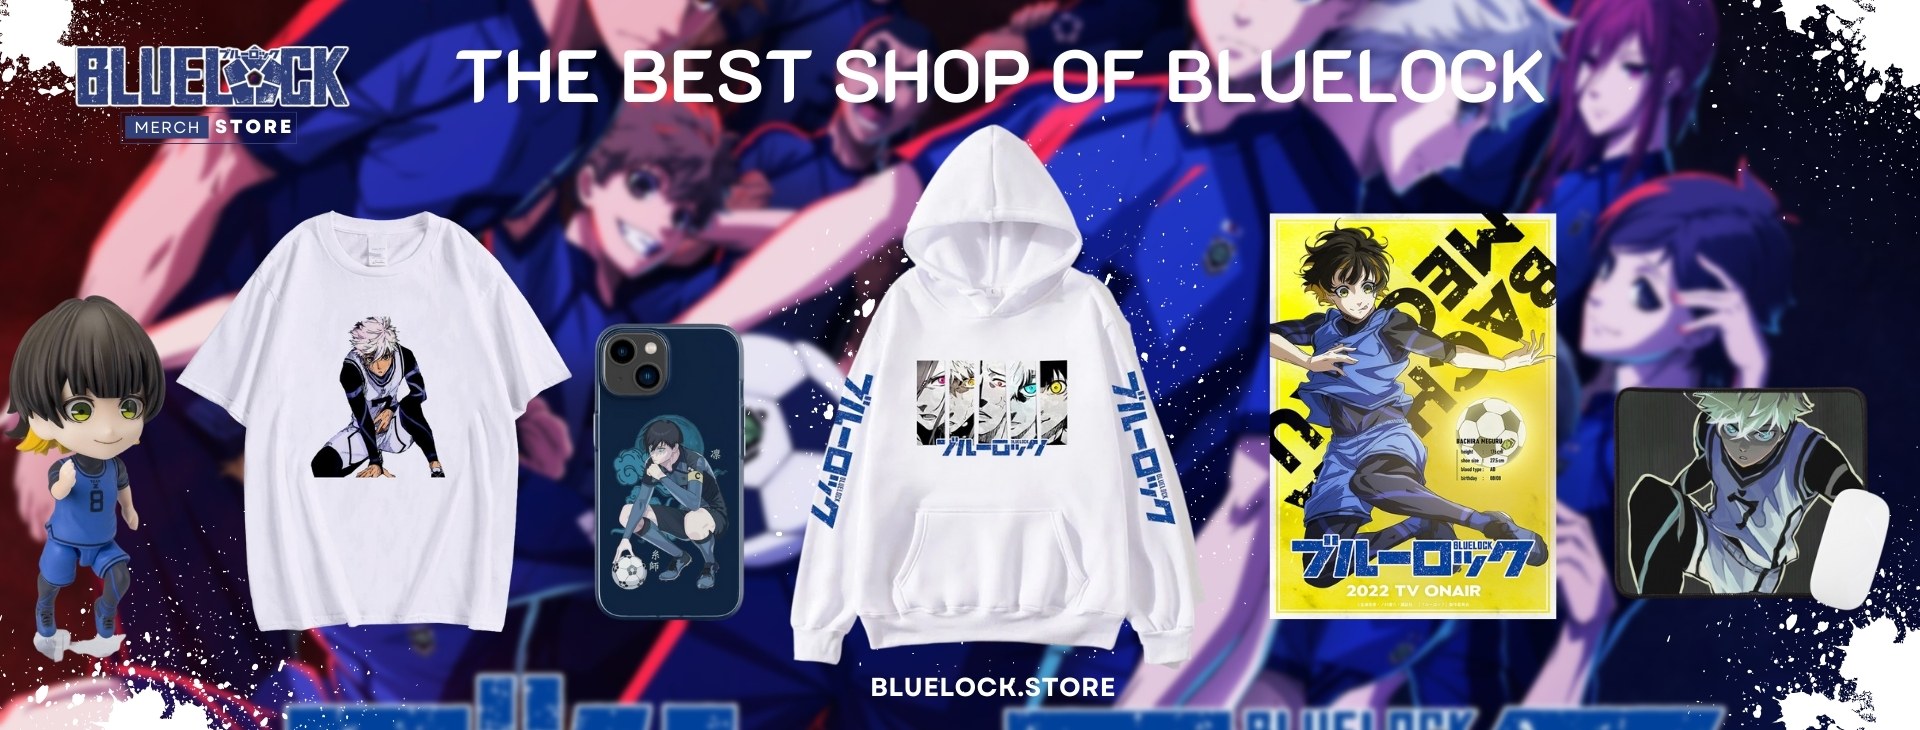 Bluelock Store Banner - Blue Lock Store